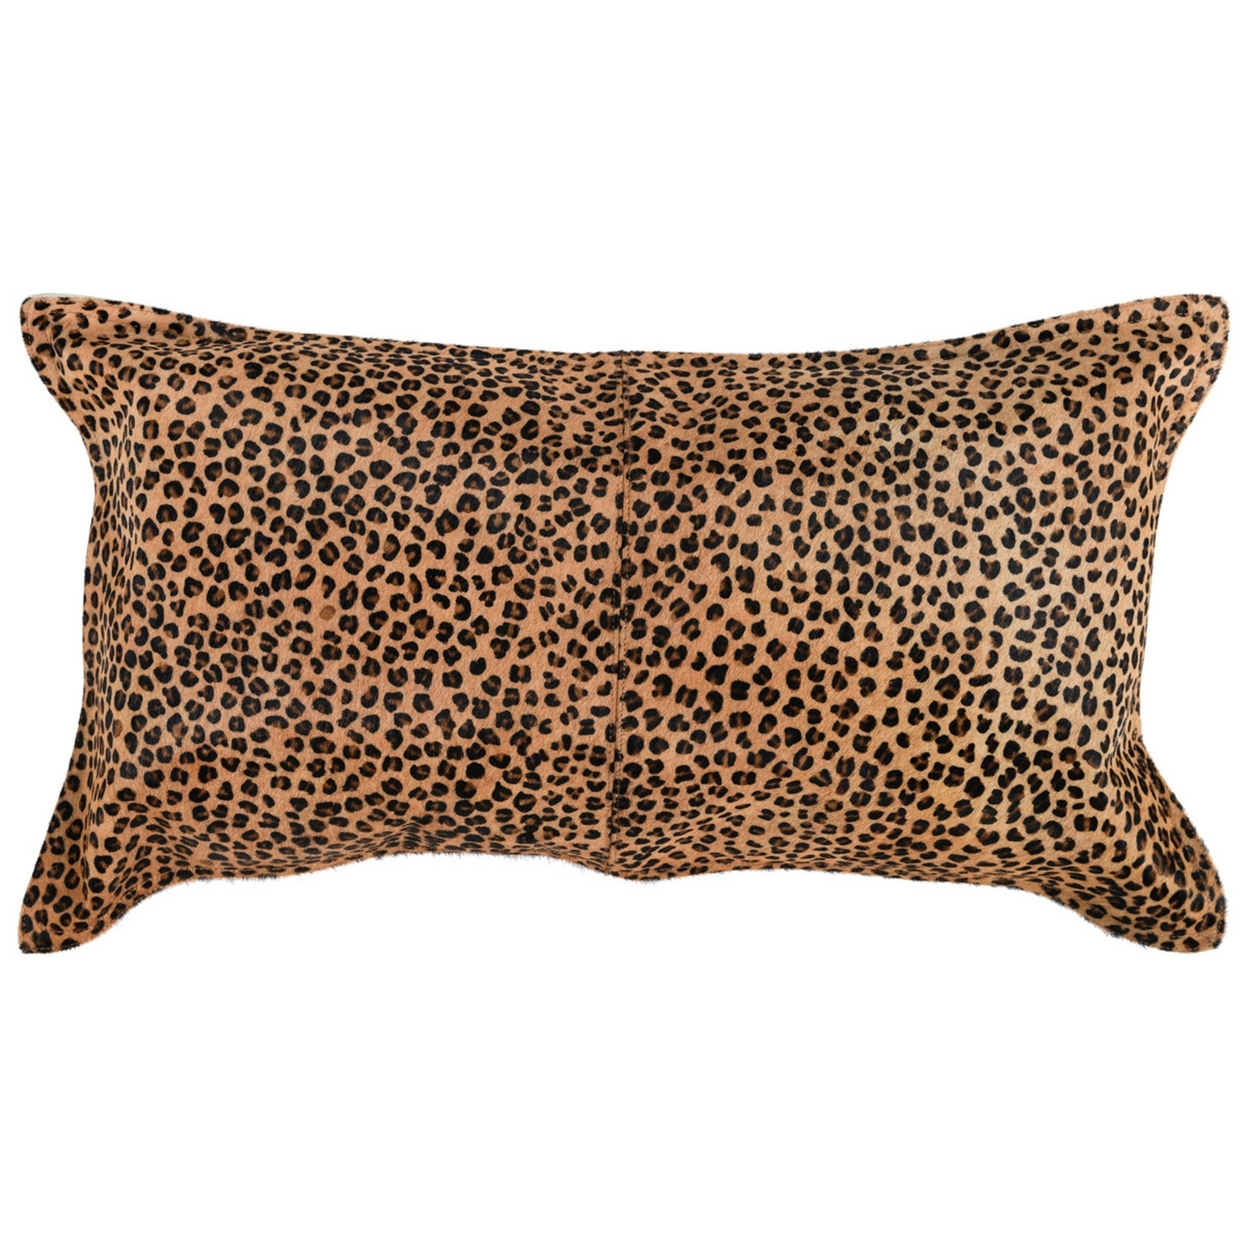 14 X 26 Lumbar Leather Accent Throw Pillow, Leopard Print, Brown And Black- Saltoro Sherpi